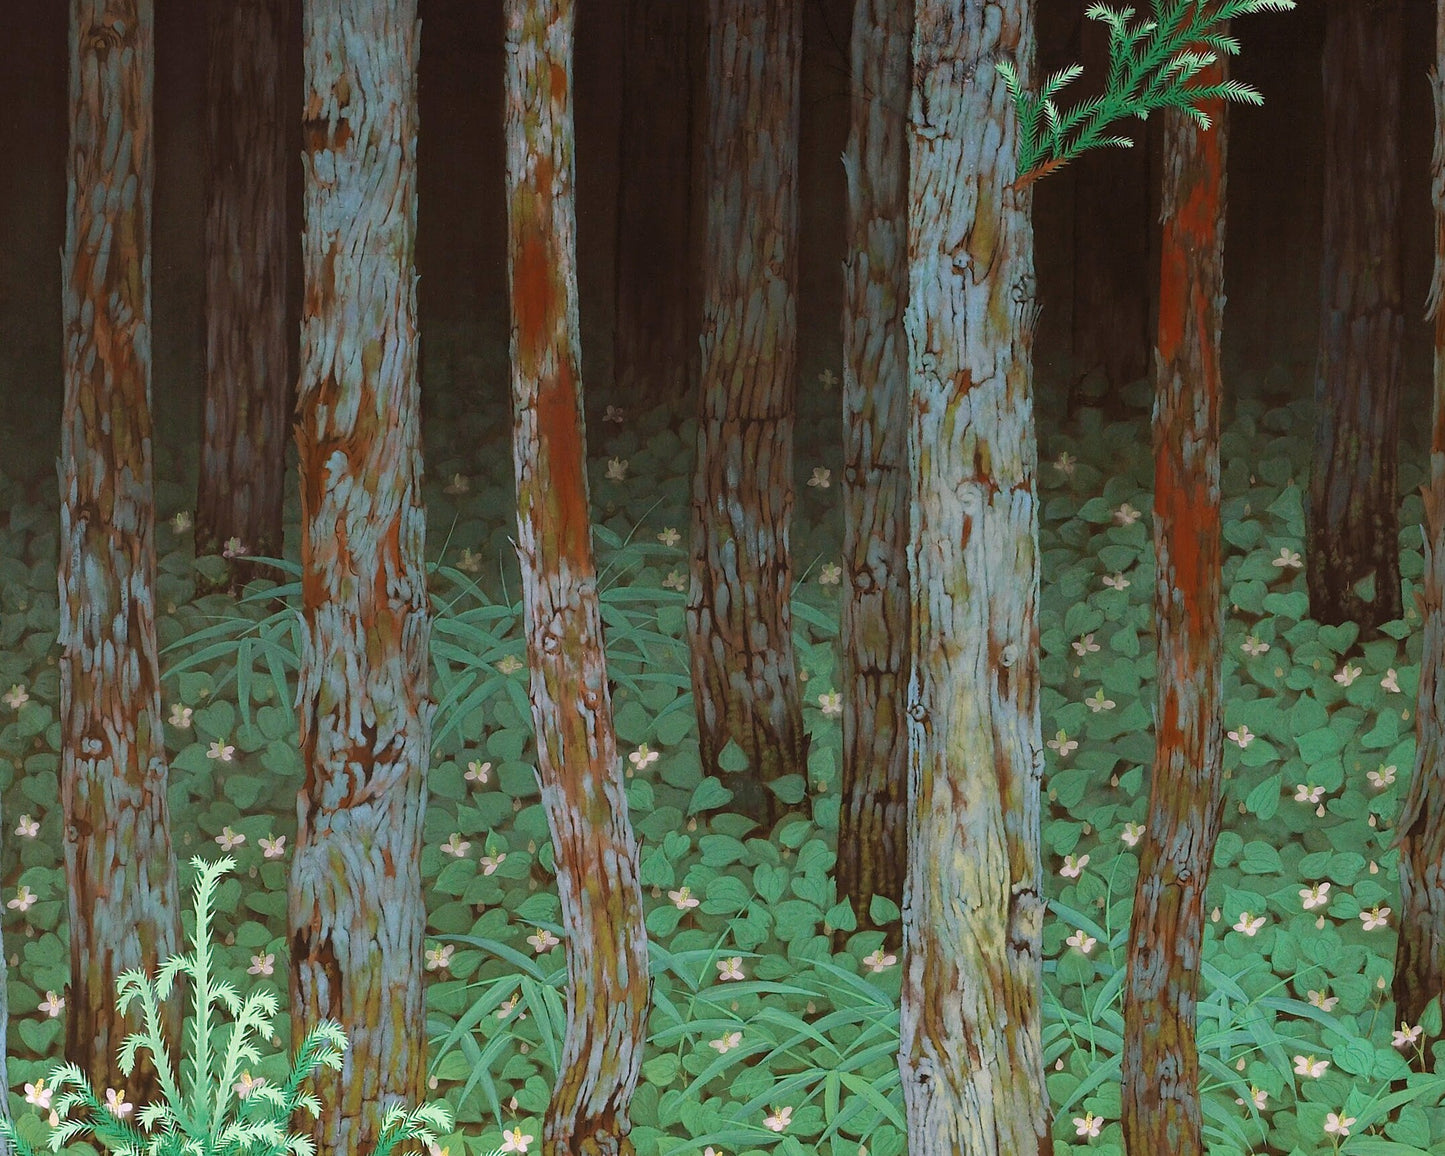 Vintage fantasy forest art print | Weasel in wild strawberries | Tree and nature wall art | Katayama Bokuyo | Asian artist